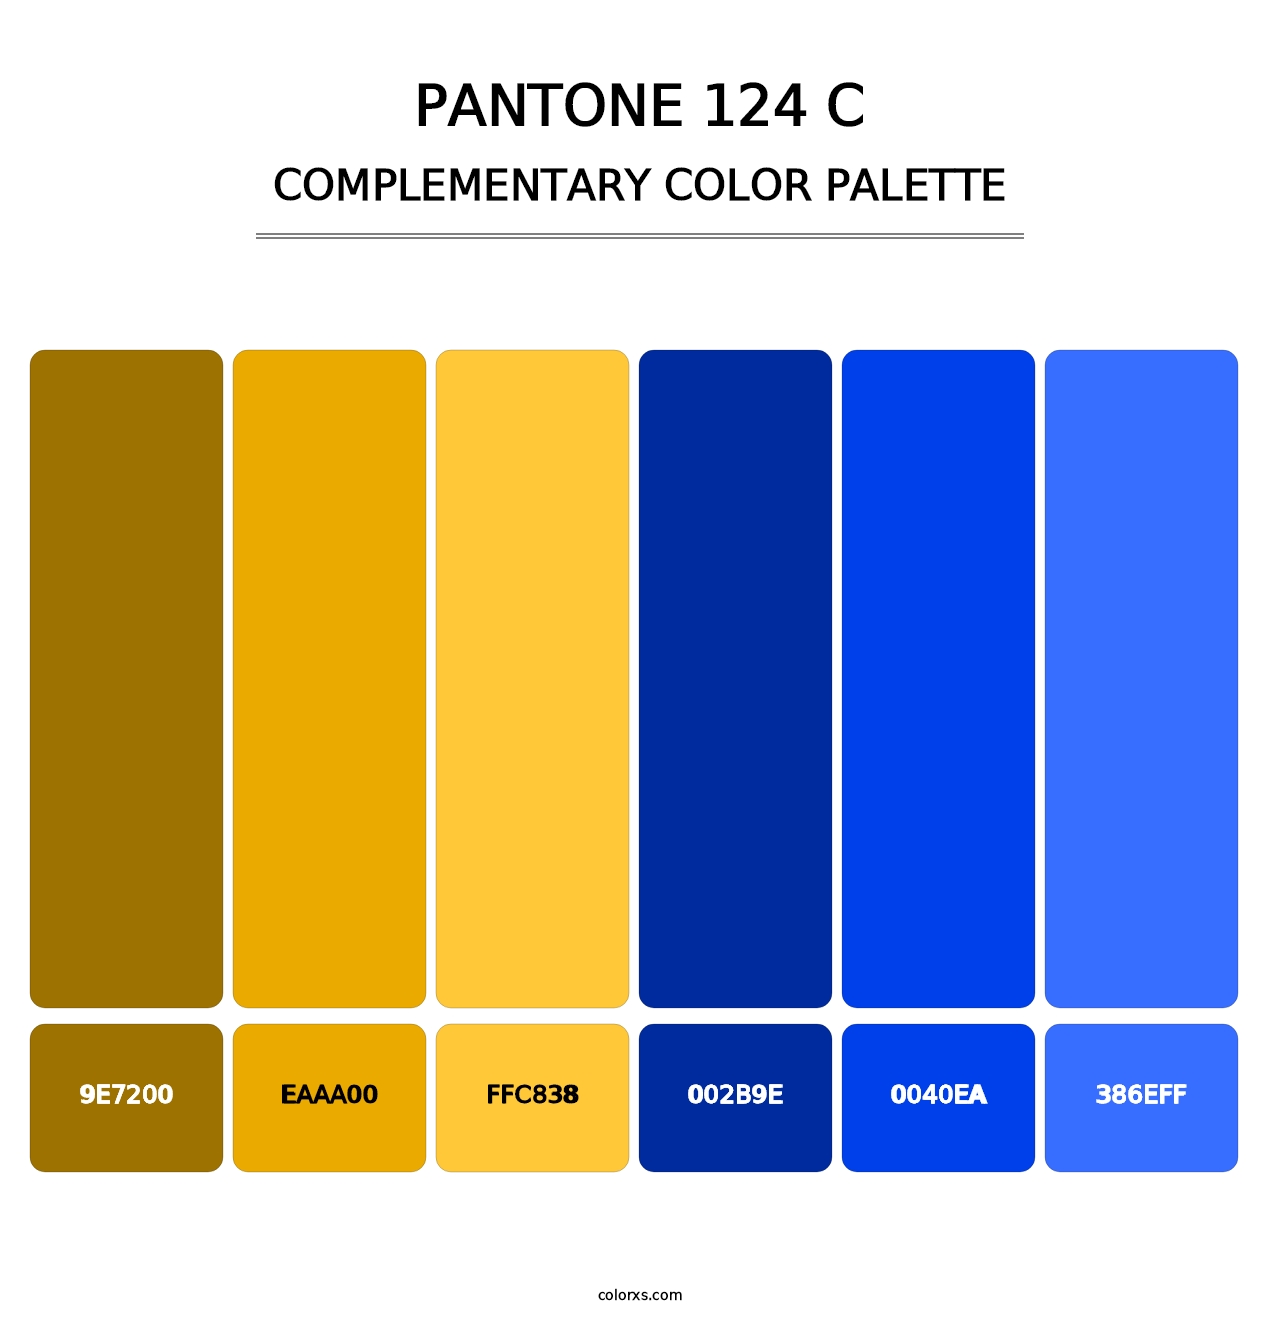 PANTONE 124 C - Complementary Color Palette